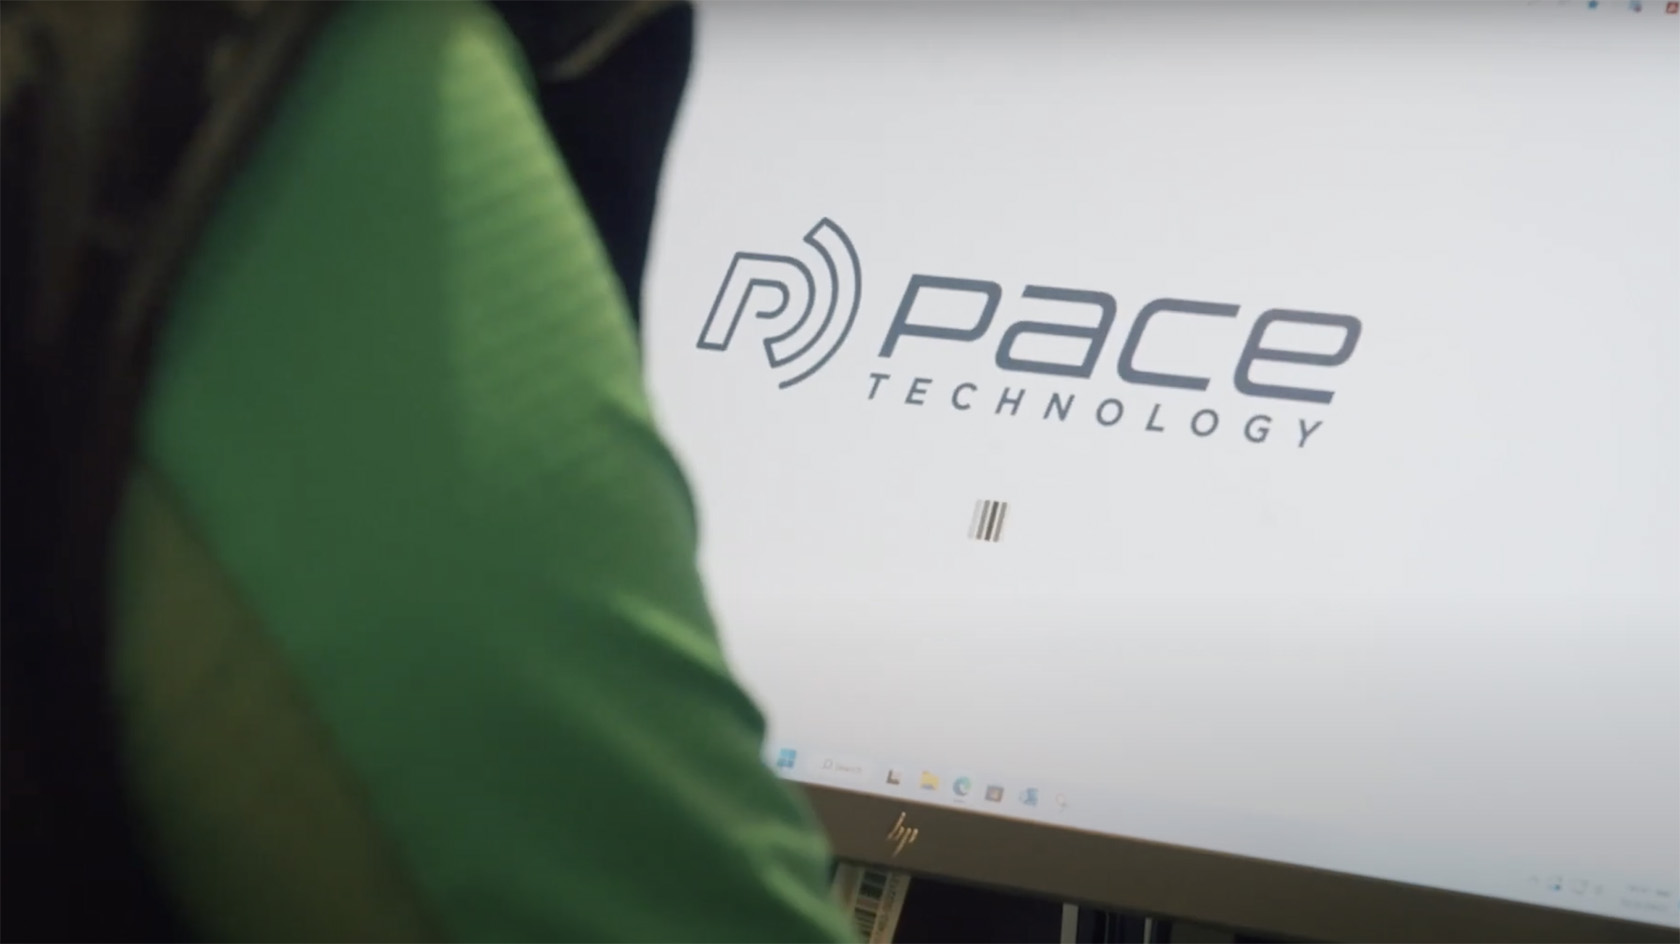 Pace Technology